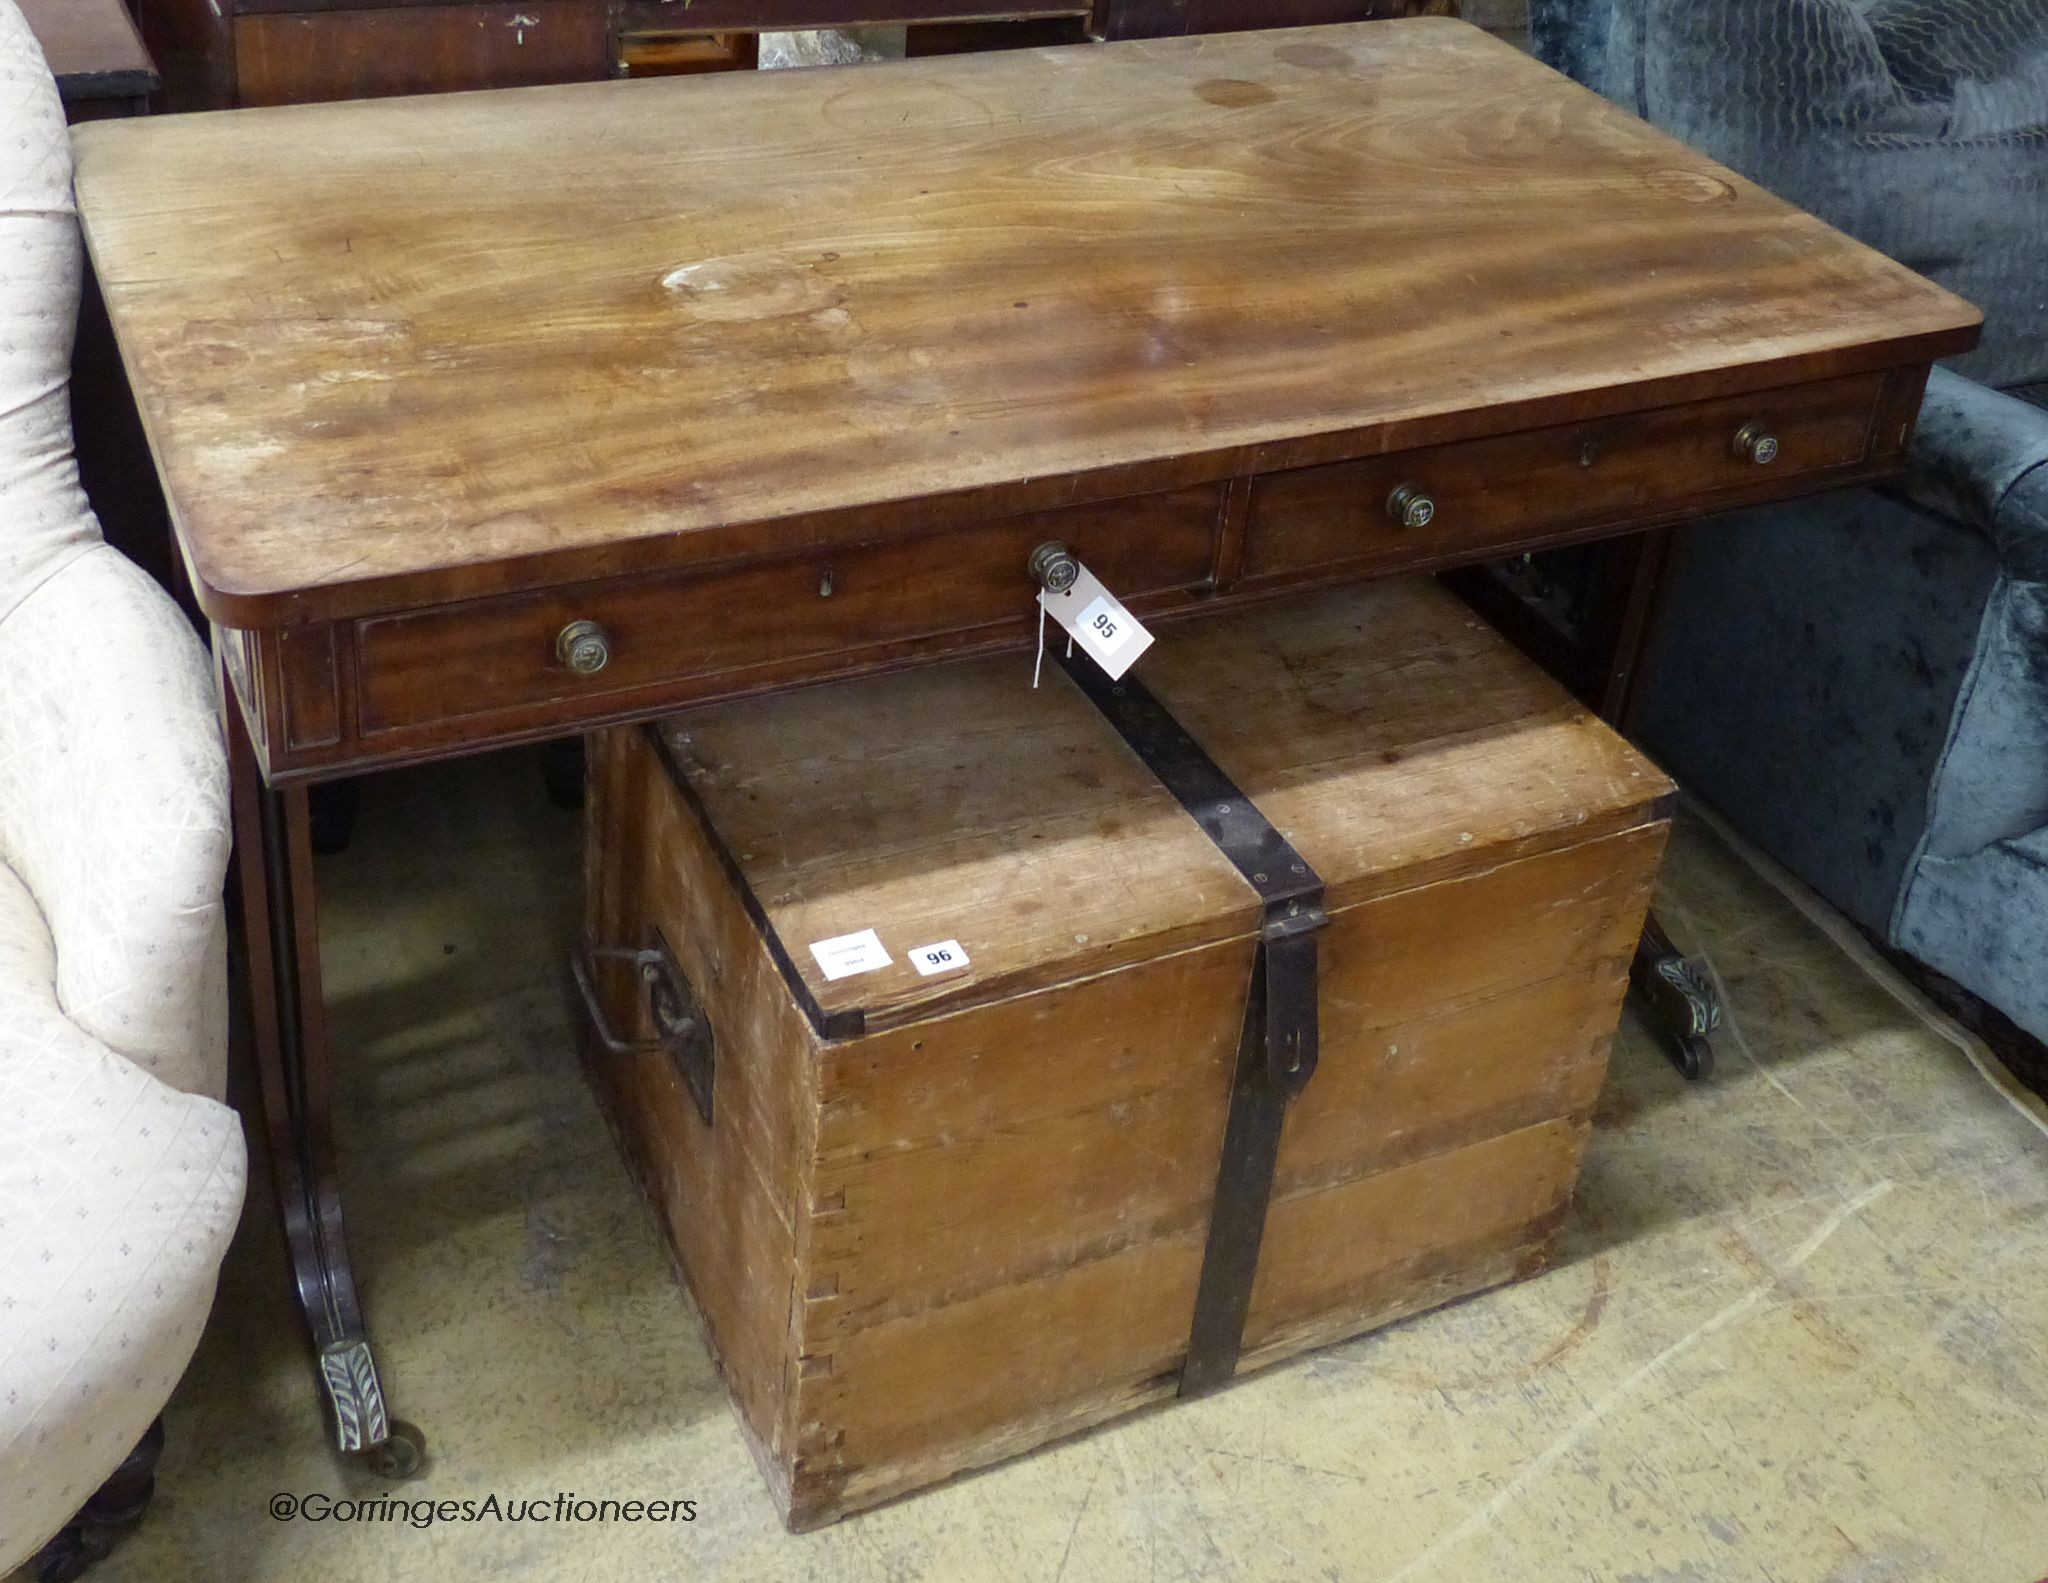 A Regency mahogany library table (a.f.), width 122cm, depth 68cm, height 73cm